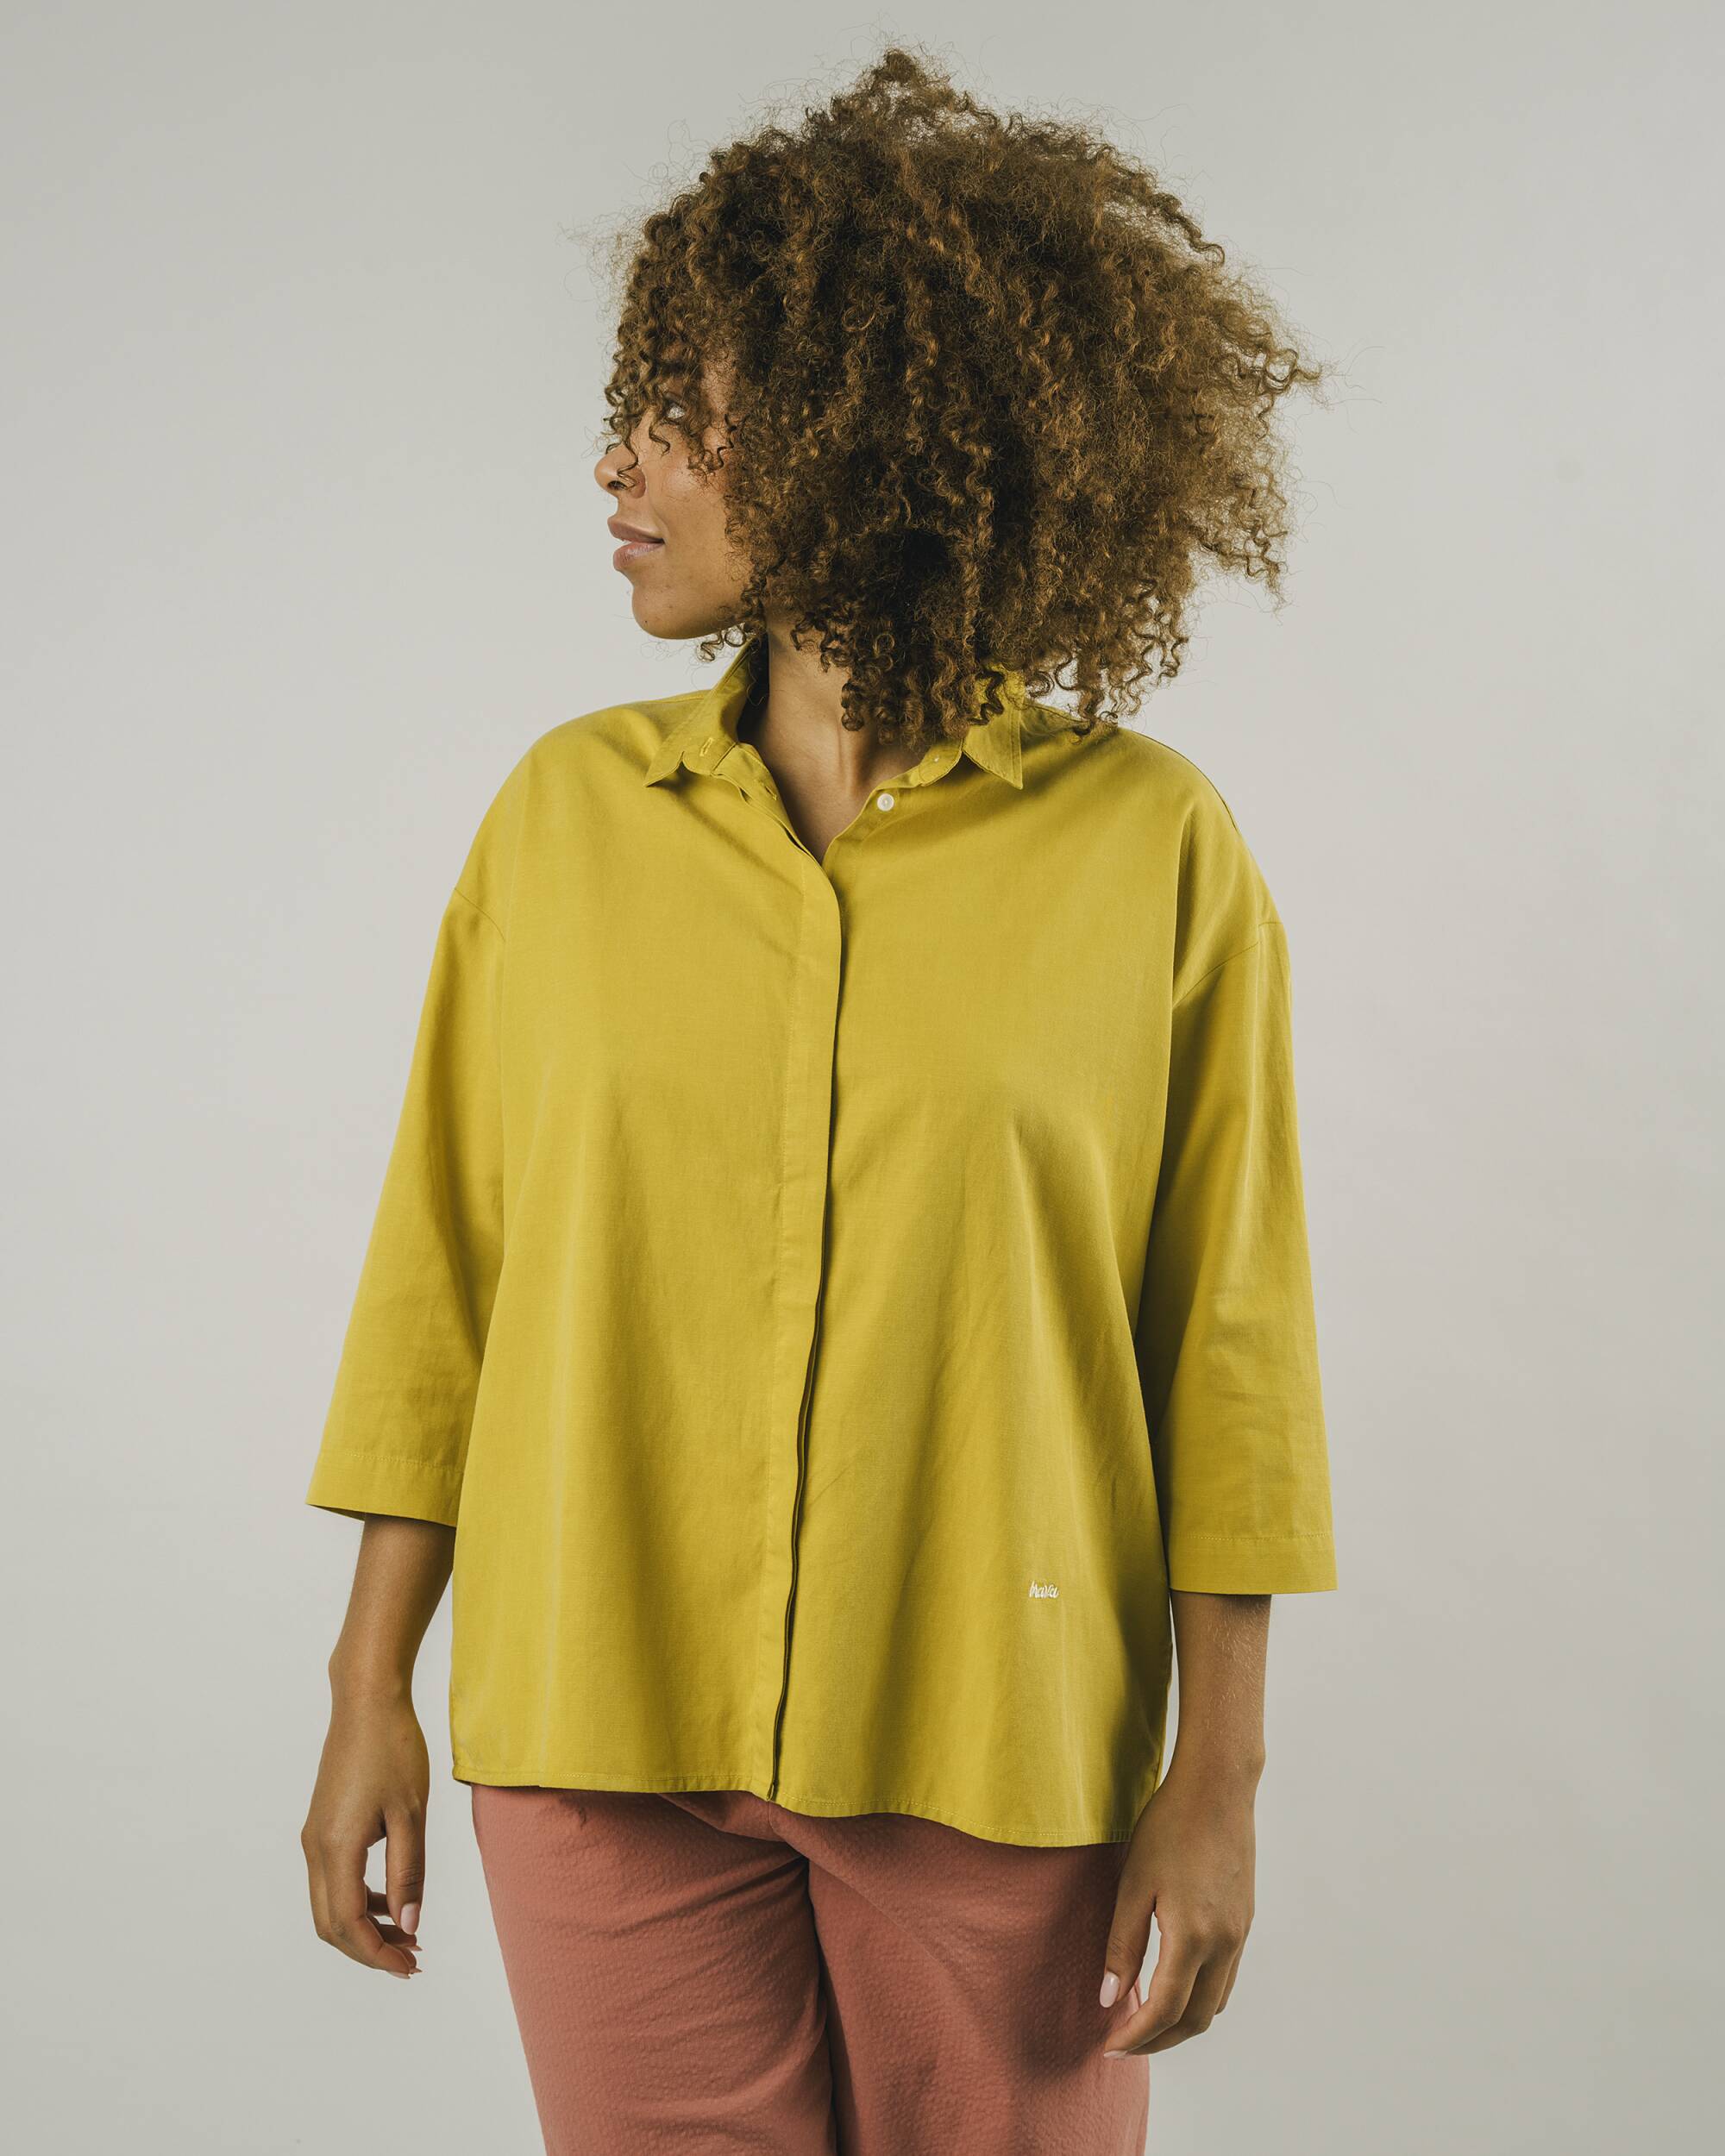 Brava Fabrics Bruses de màniga llarga Brusa Juicy Llimona moda sostenible moda ètica